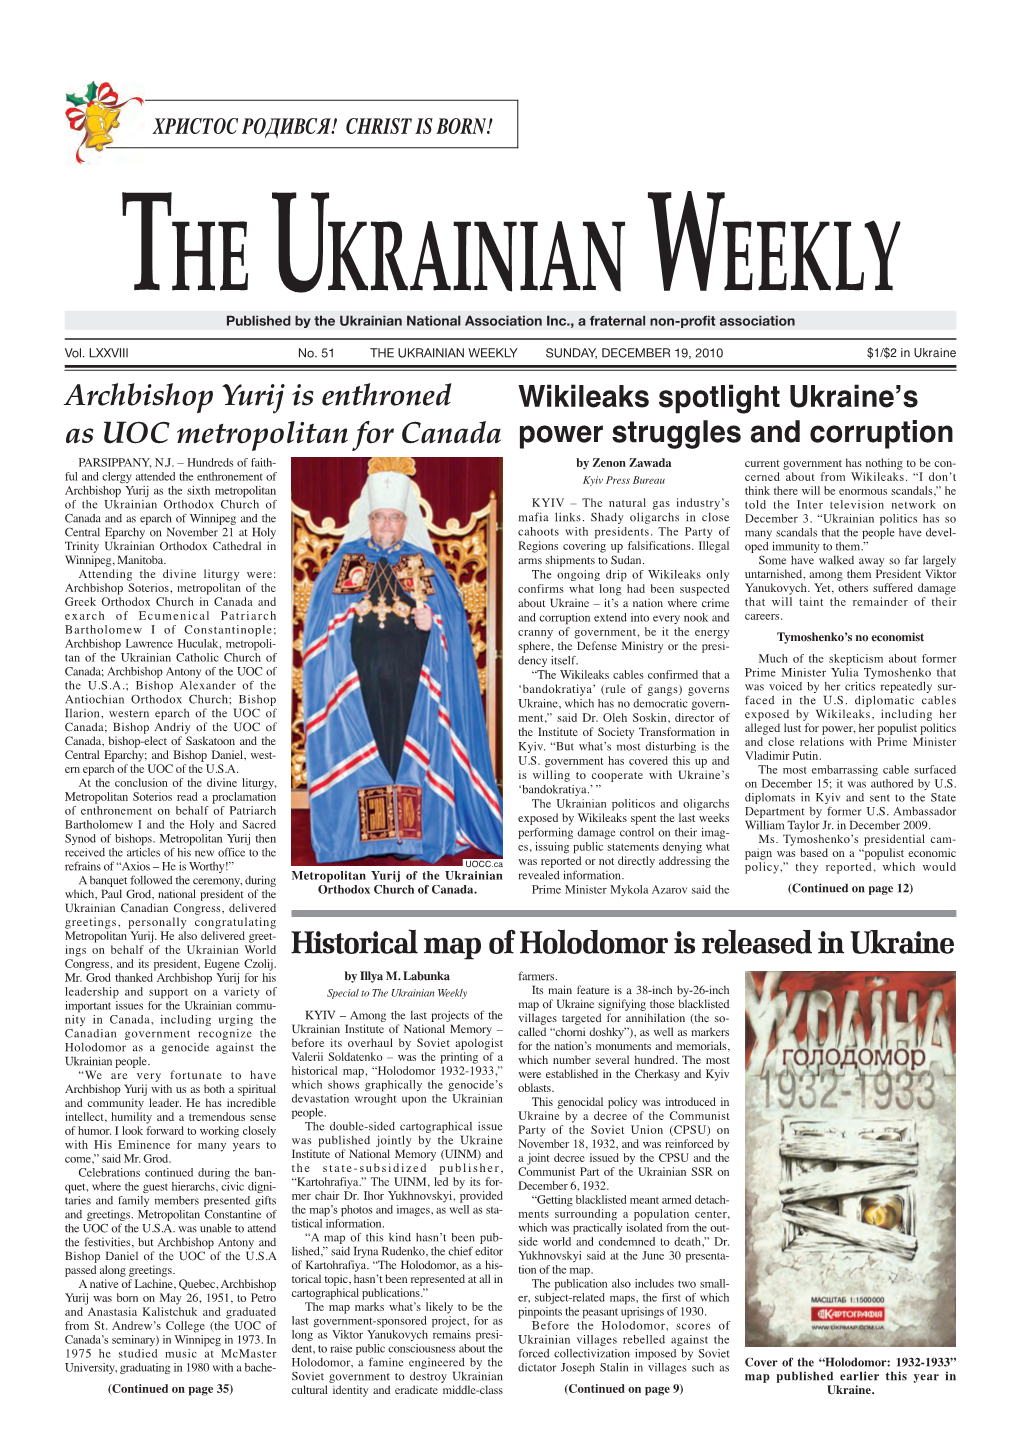 The Ukrainian Weekly 2010, No.51